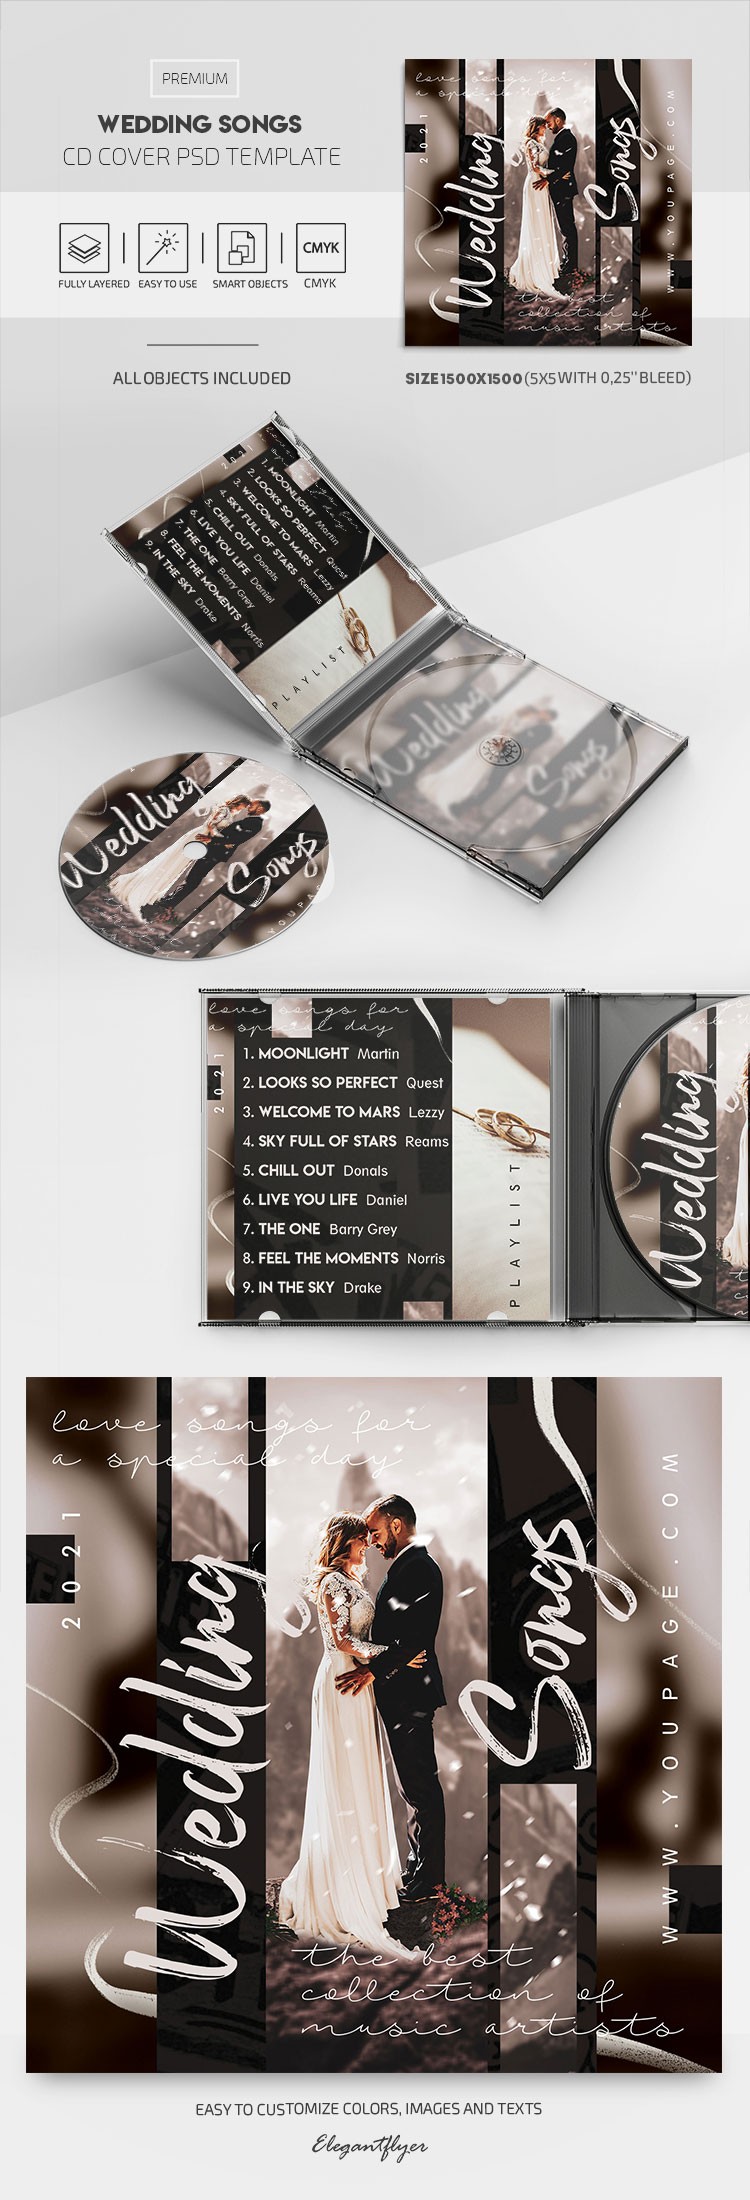 Wedding Songs CD Cover by ElegantFlyer